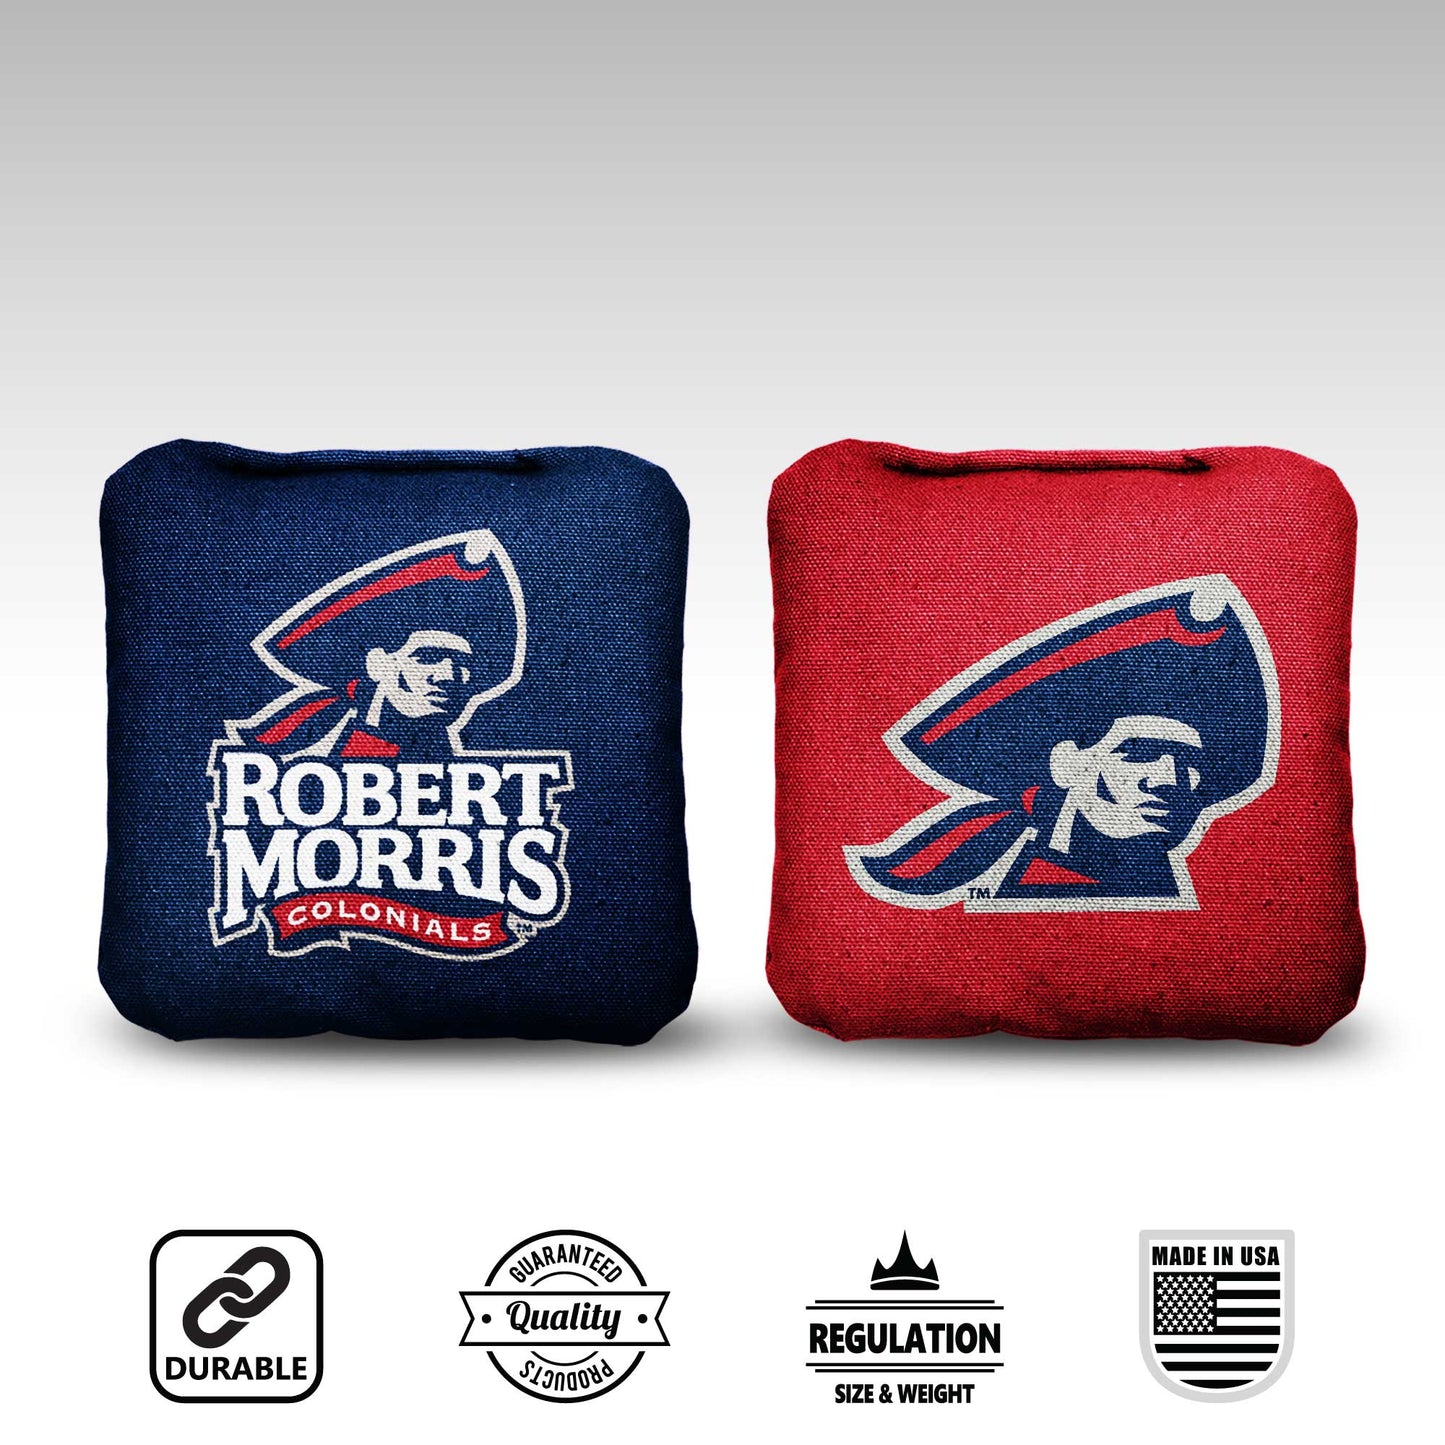 Robert Morris University Cornhole Bags - 8 Cornhole Bags